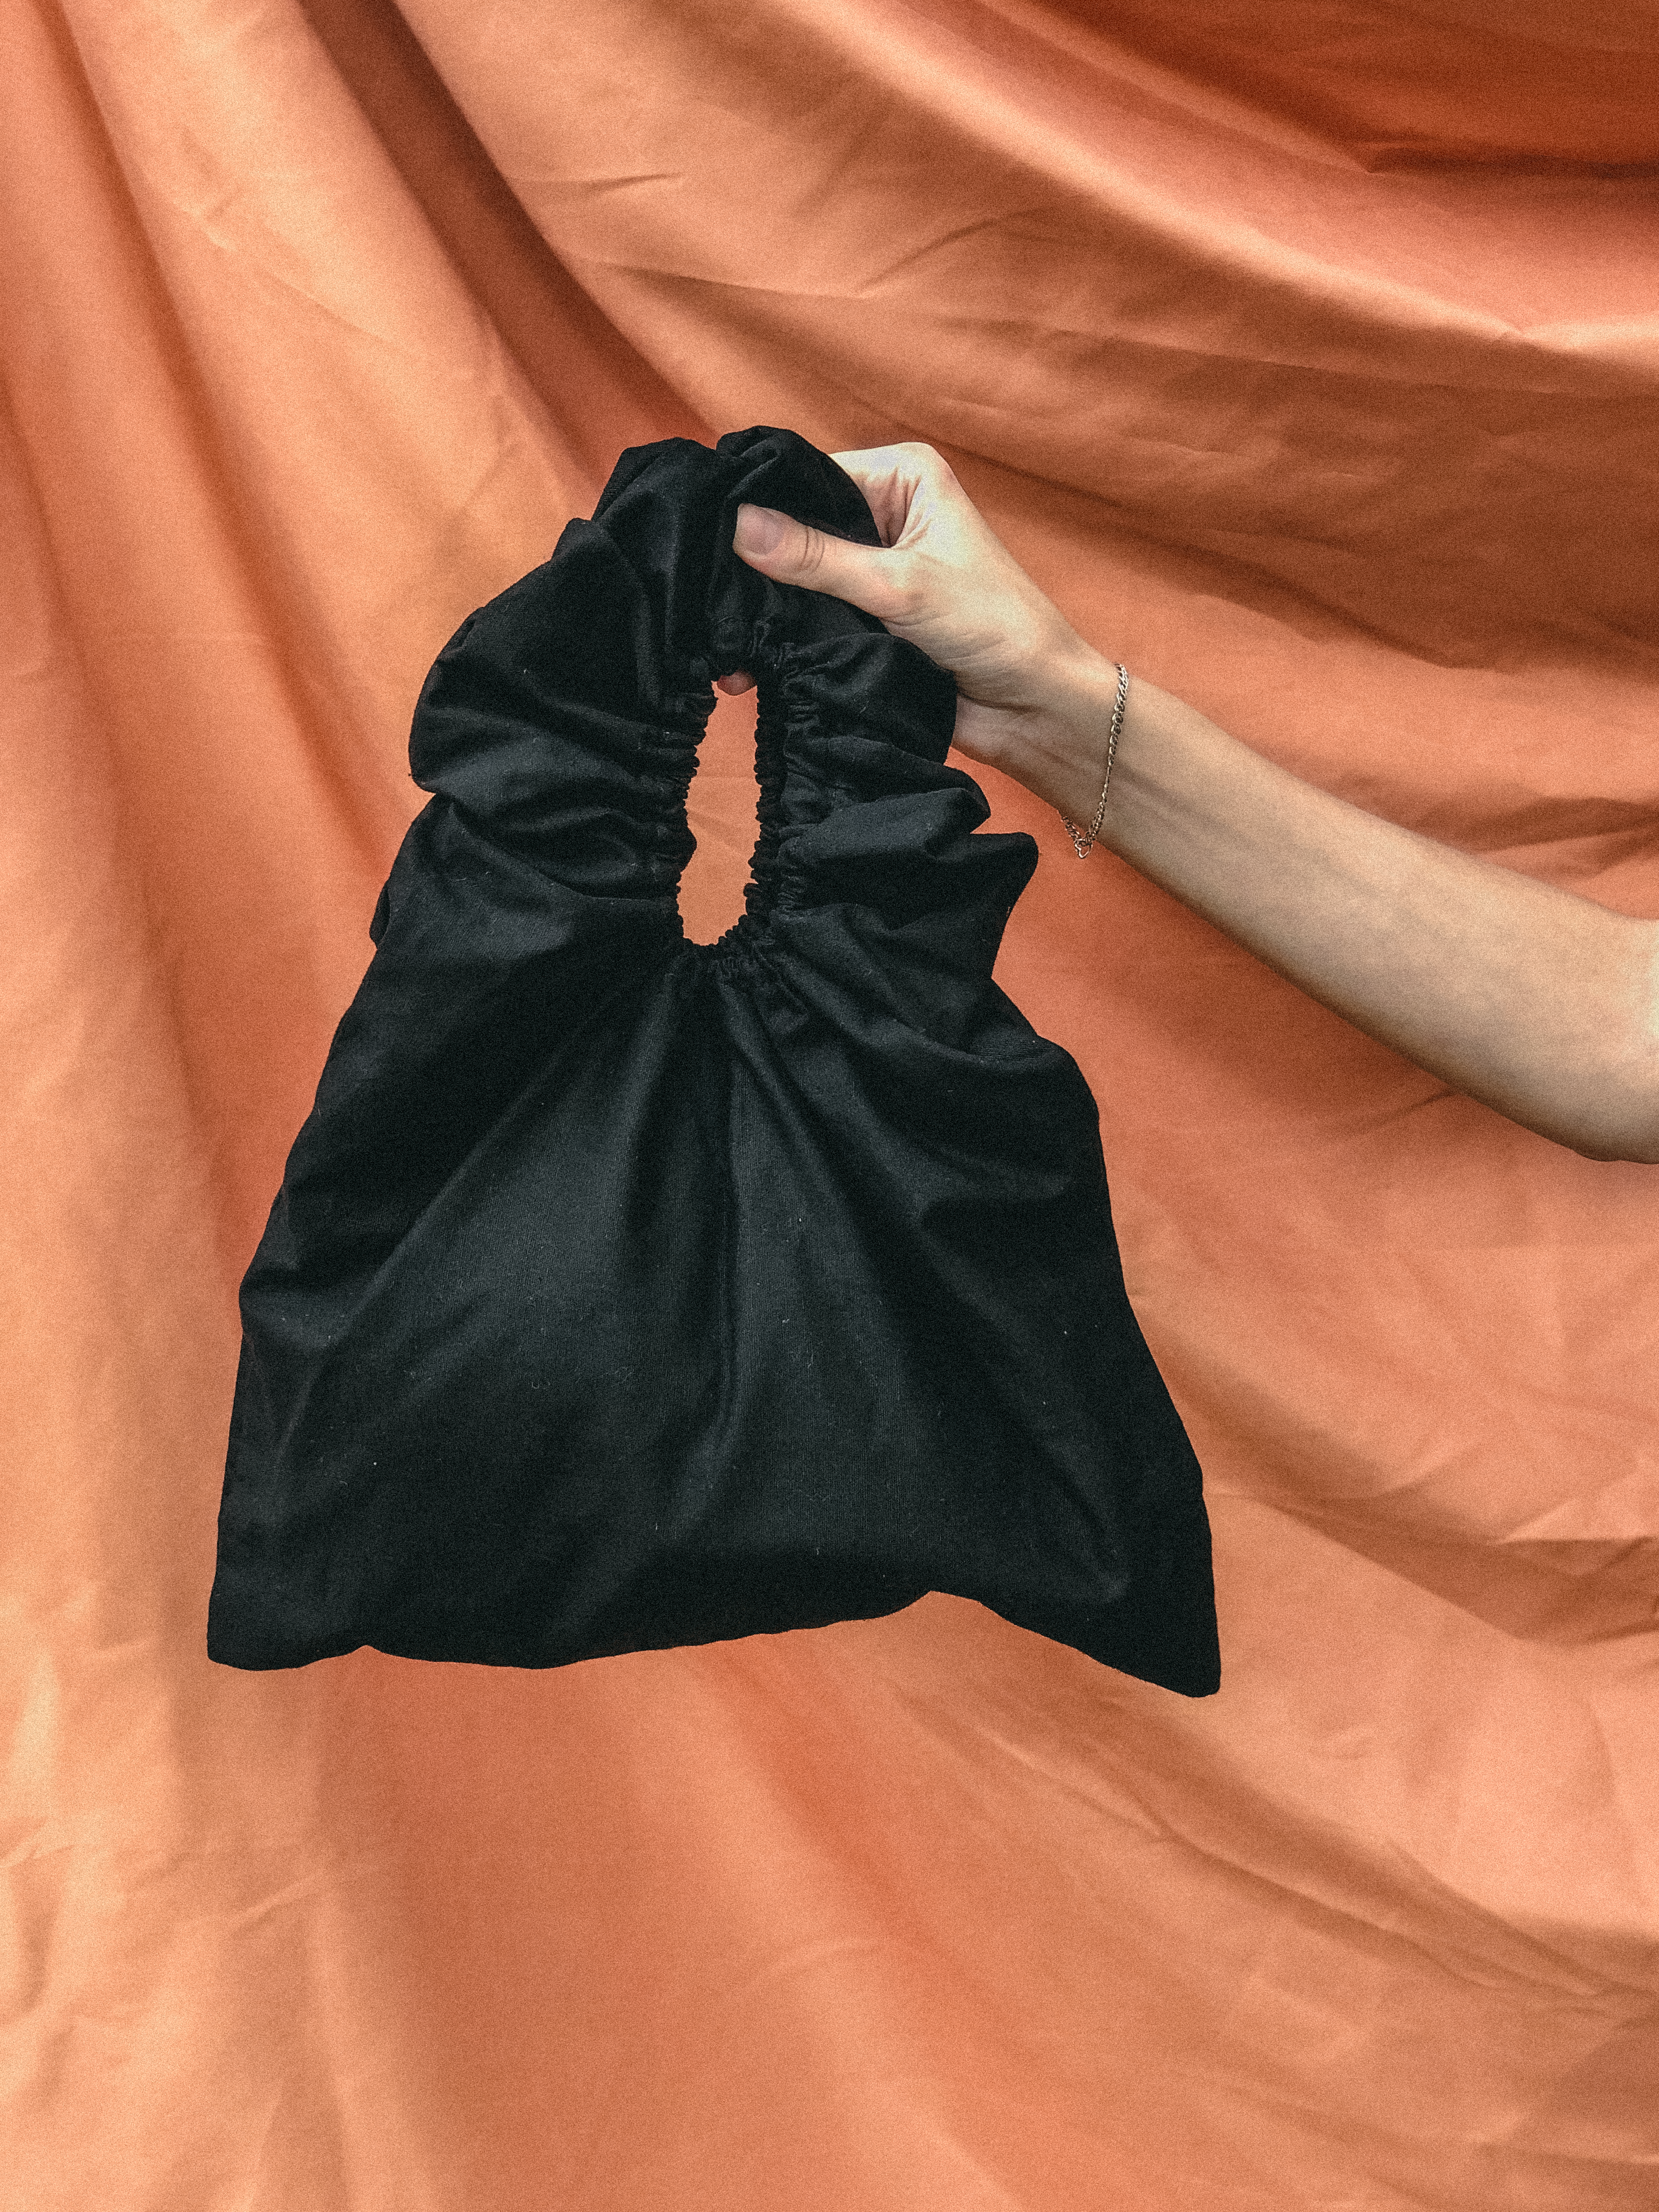 Dumpling Bag in Black by Veronique